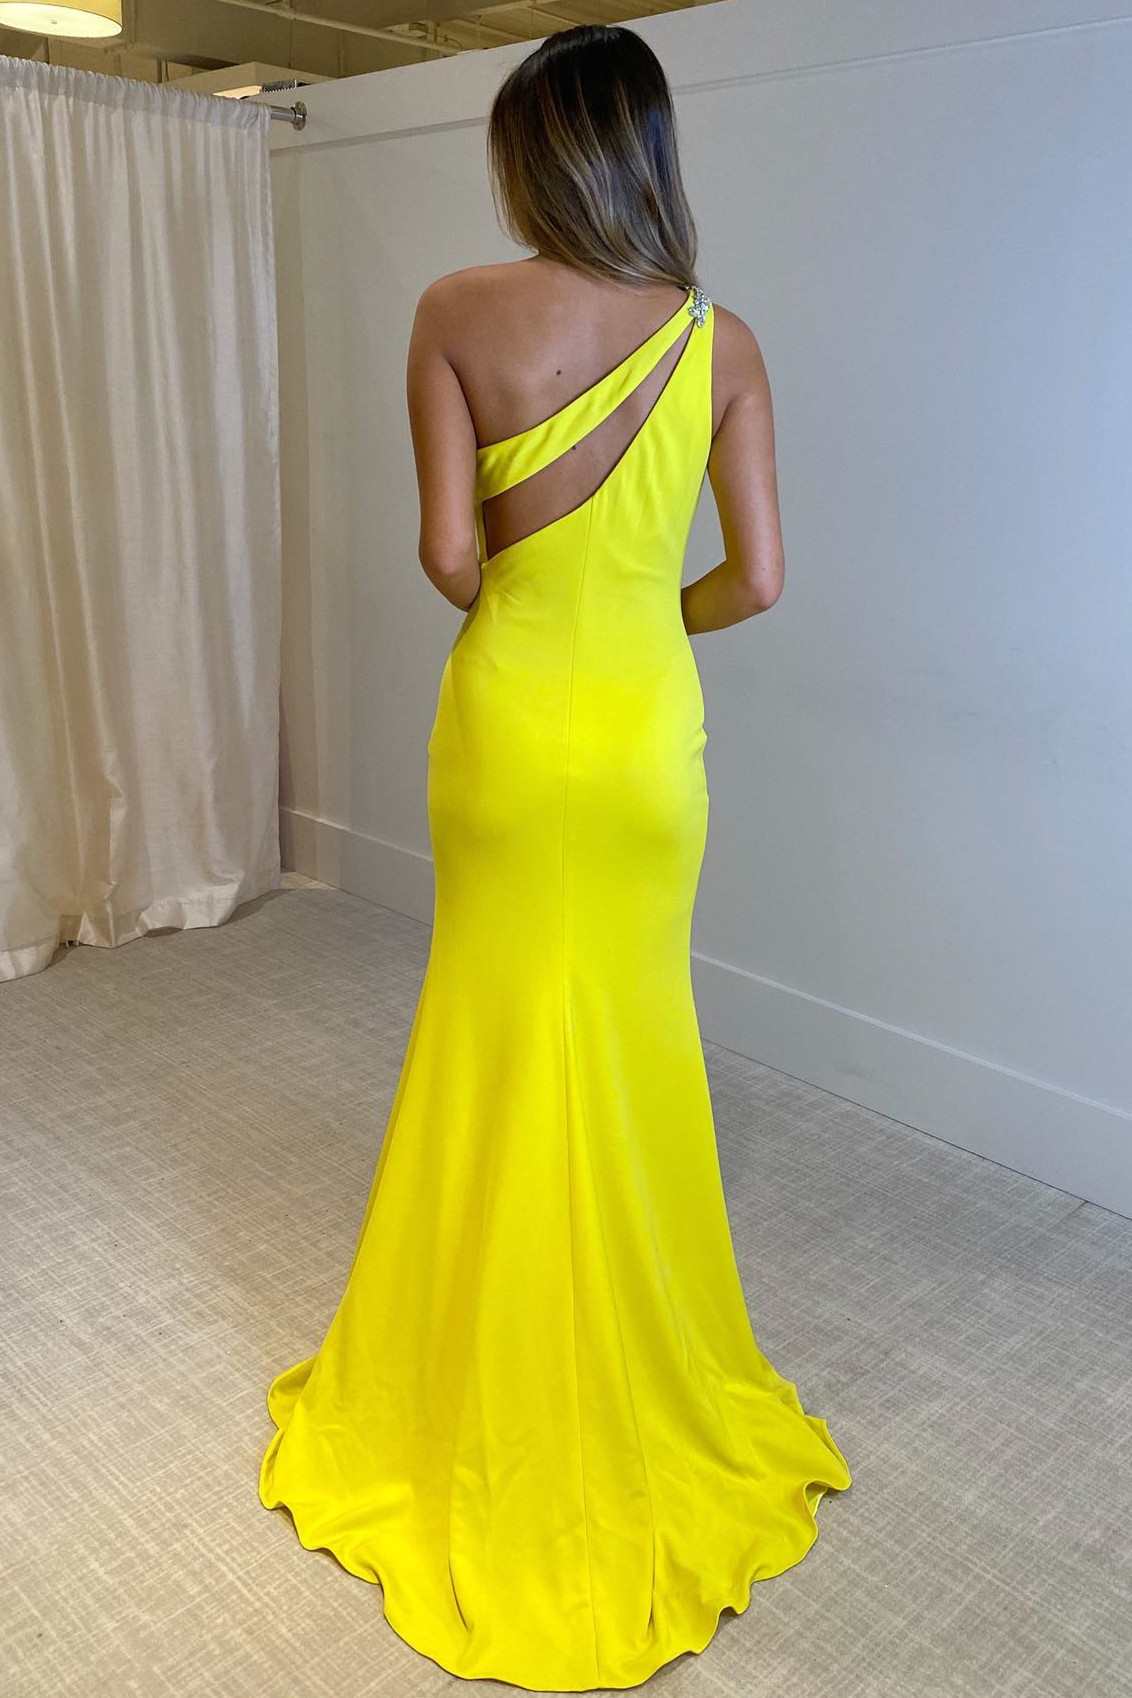 One-Shoulder Yellow Rhinestones Keyhole Mermaid Long Prom Dress with Slit